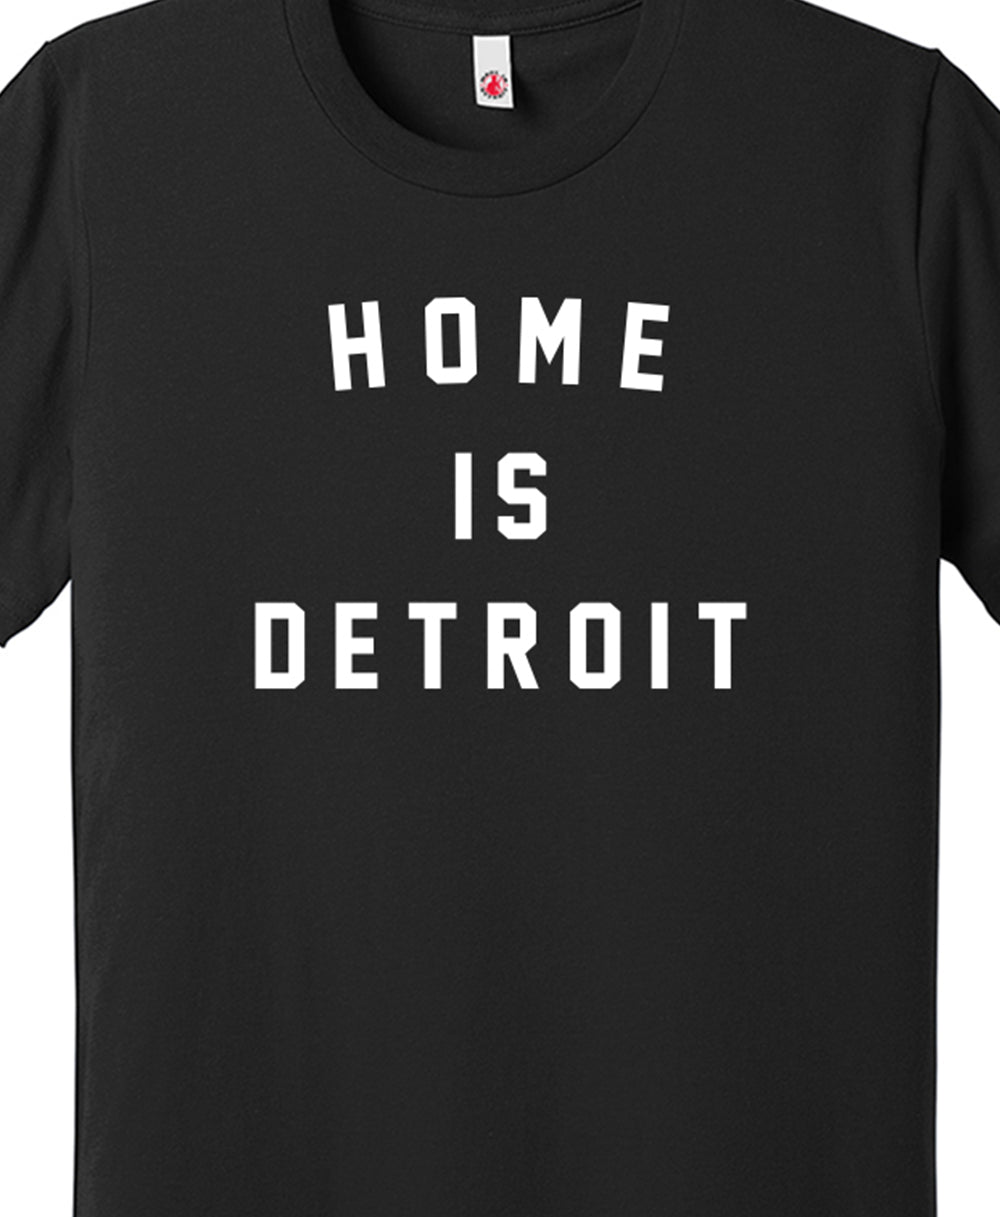 Home Is Detroit - Tee